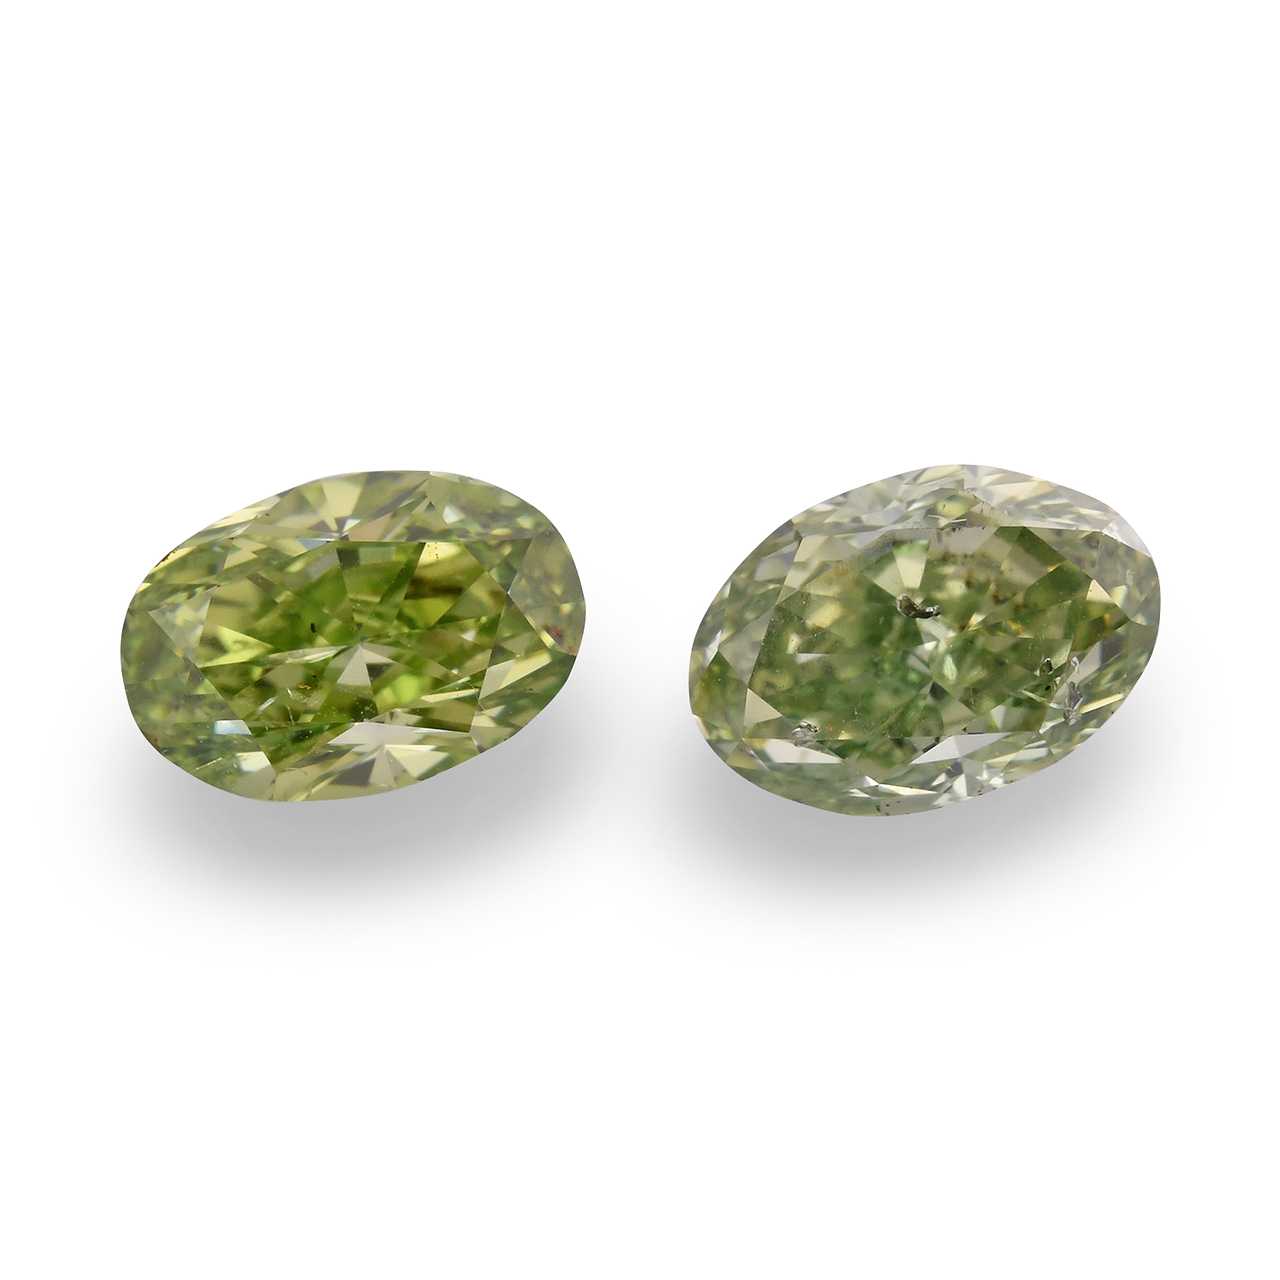 1.62 carat, Fancy Vivid Yellowish Green Diamonds, Oval Shape, (SI2)  Clarity, GIA, SKU 432455